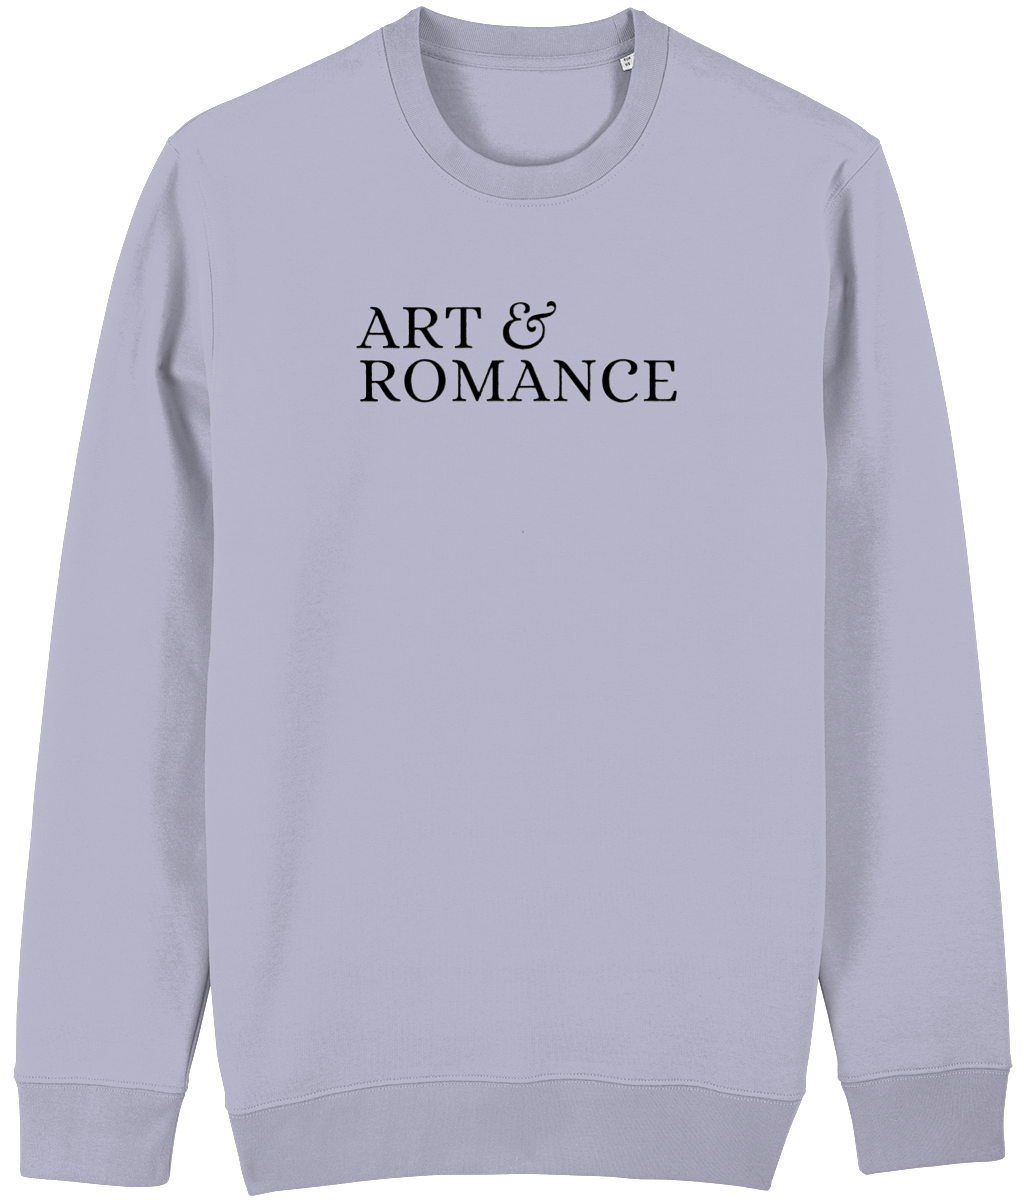 ART AND ROMANCE SWEATSHIRT